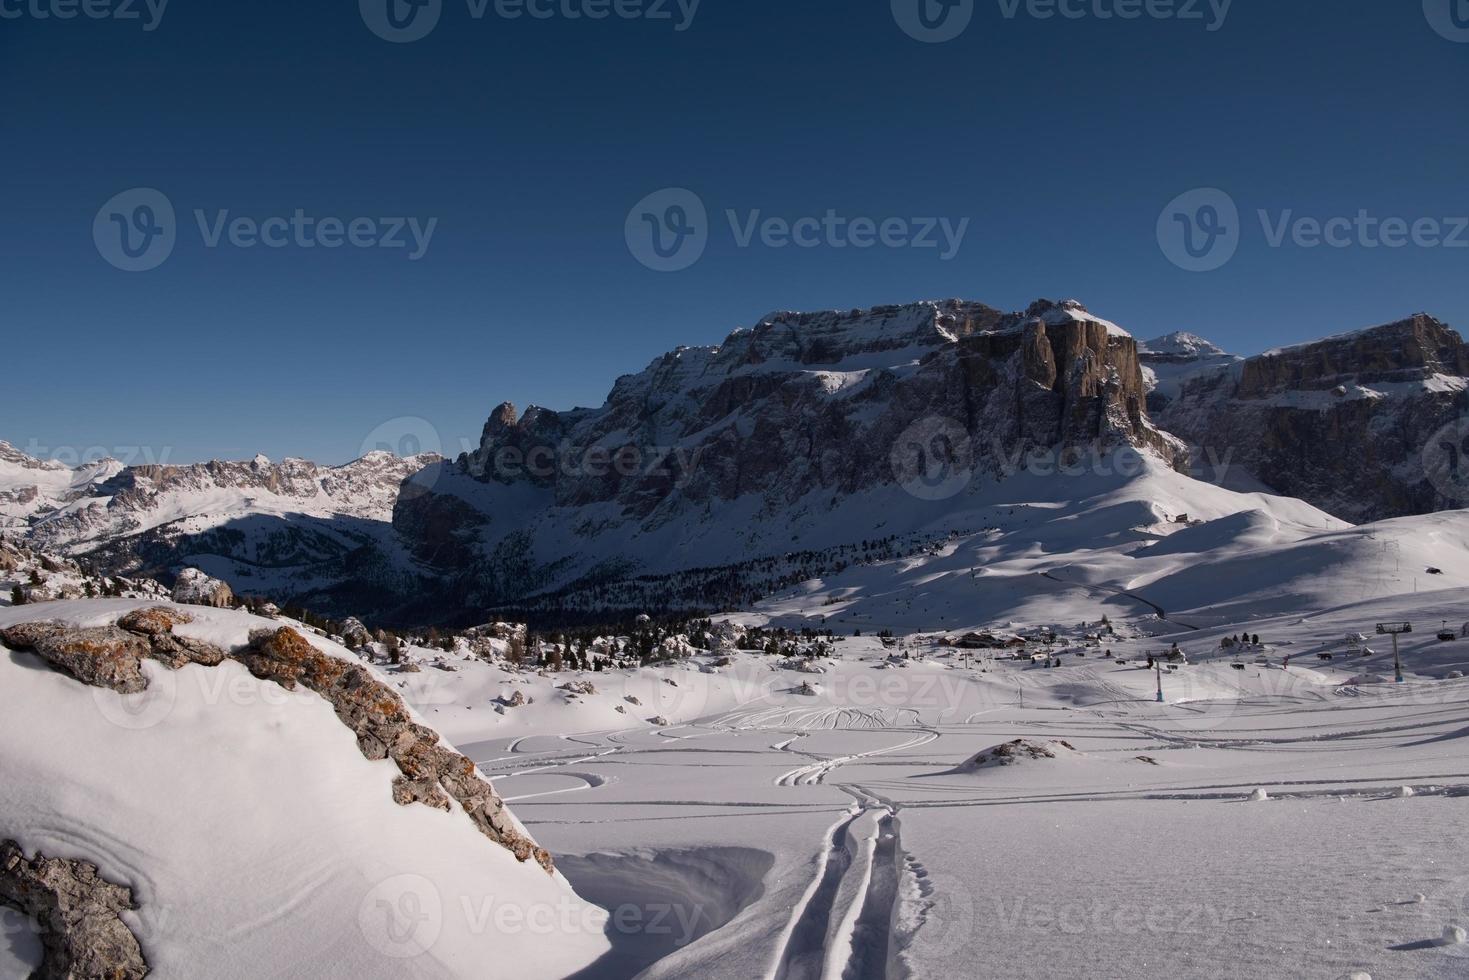 touring ski tracks in snow photo